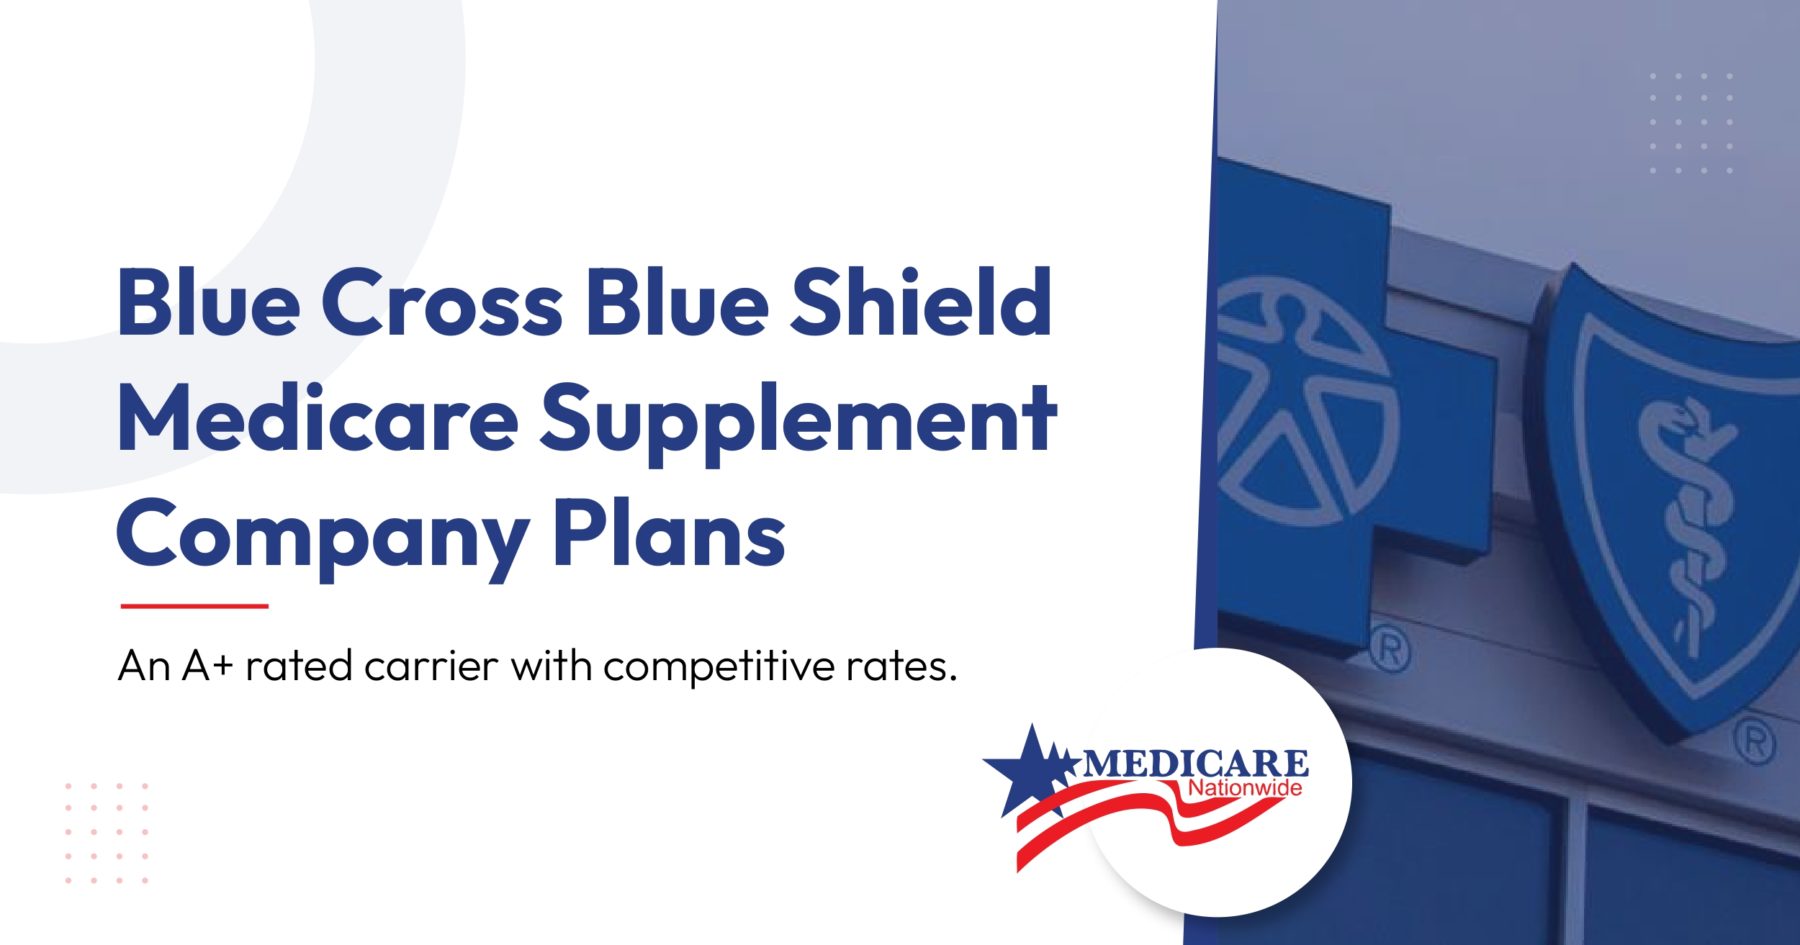 Blue Cross Blue Shield Medicare Supplement Company Plans